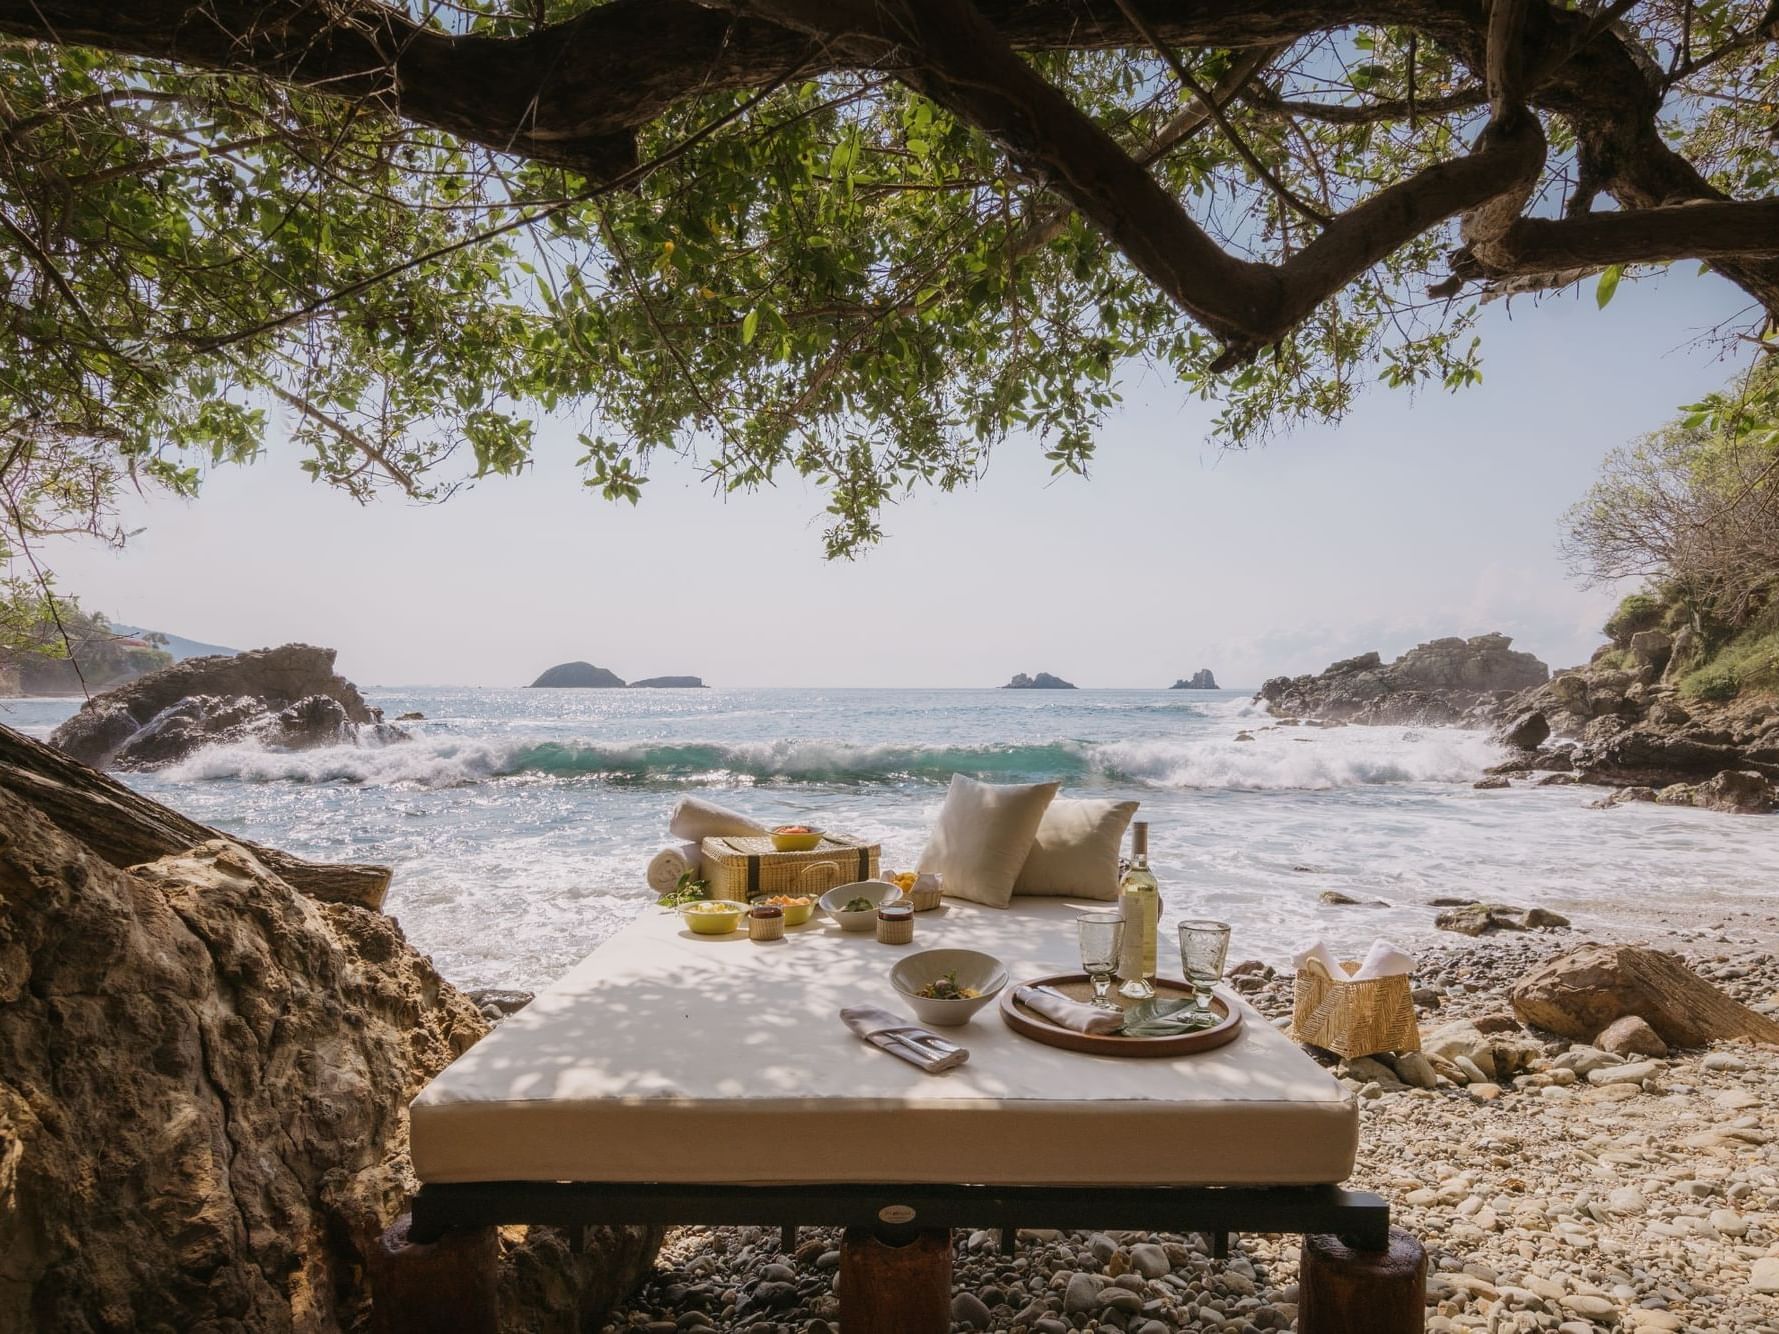 Beach Picnic set-up under a shady tree at Cala de Mar Resort